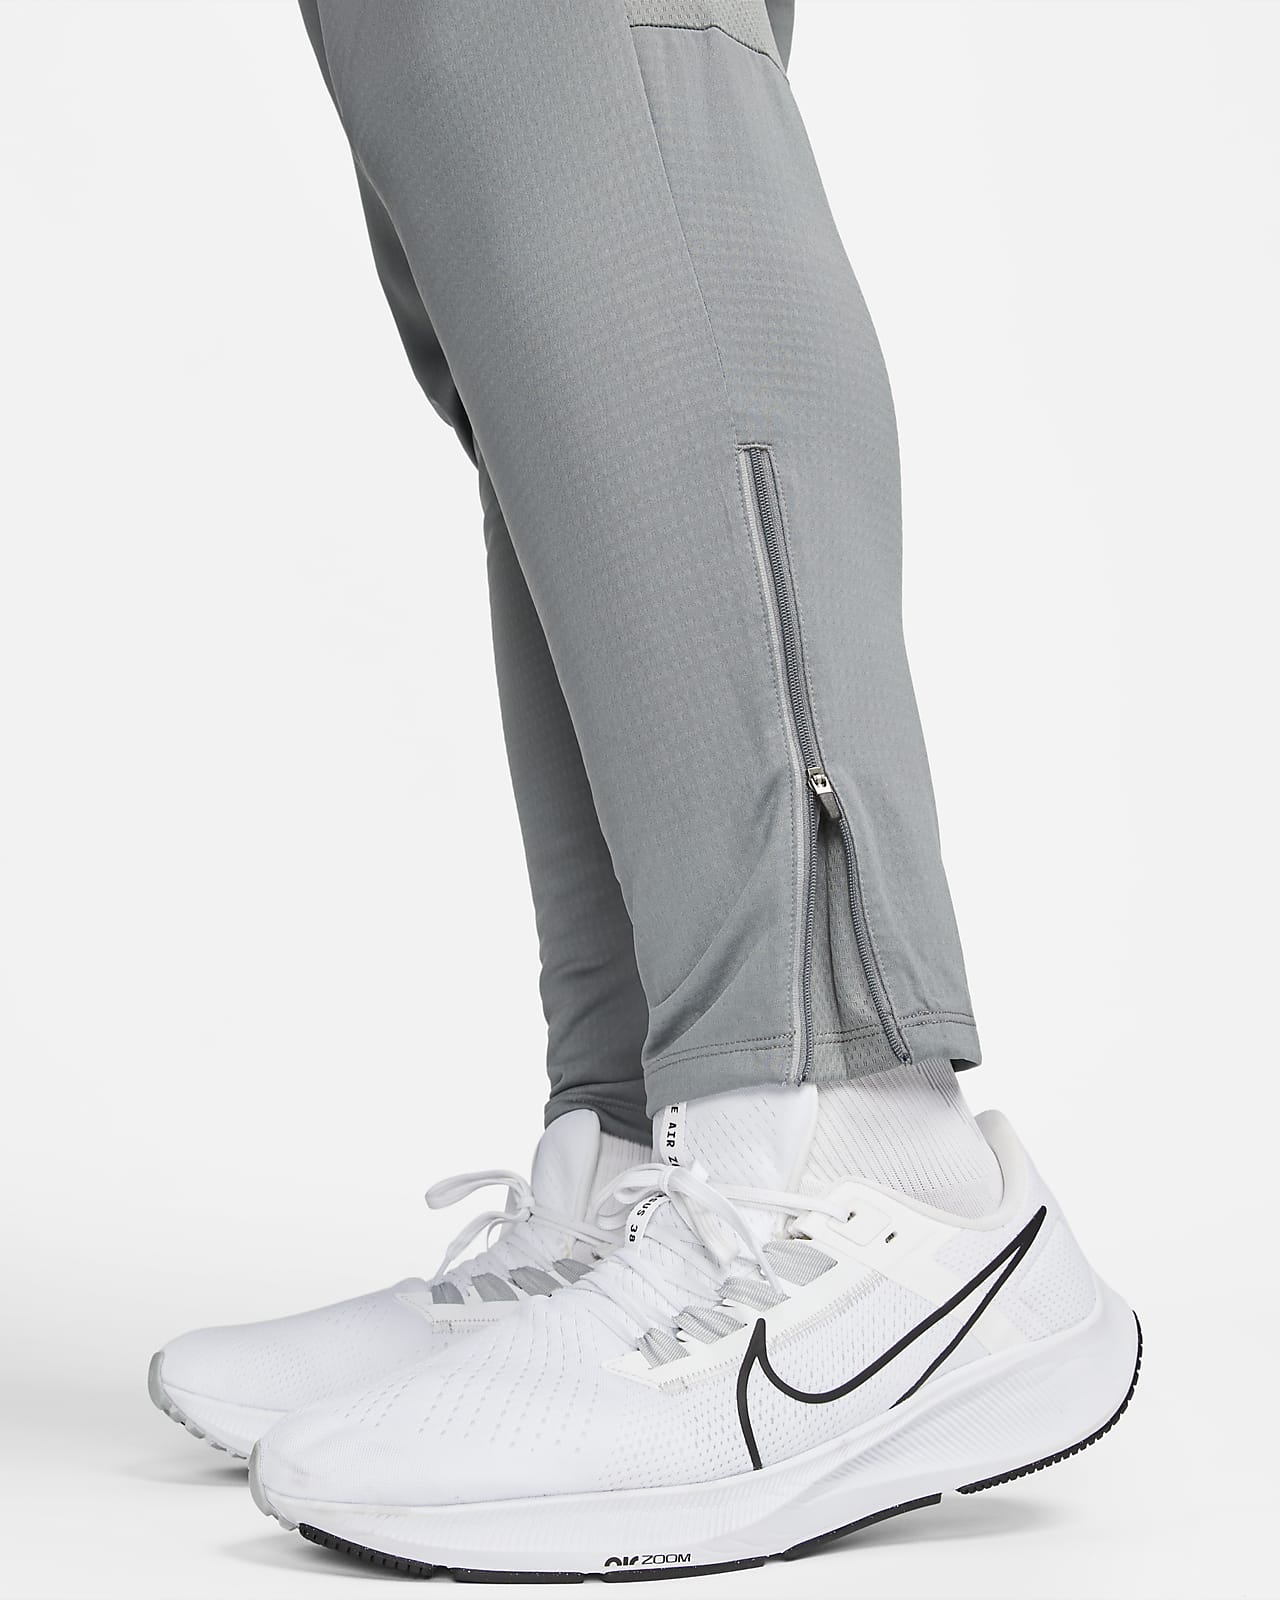 Pantalons de Running pour Homme. Nike FR